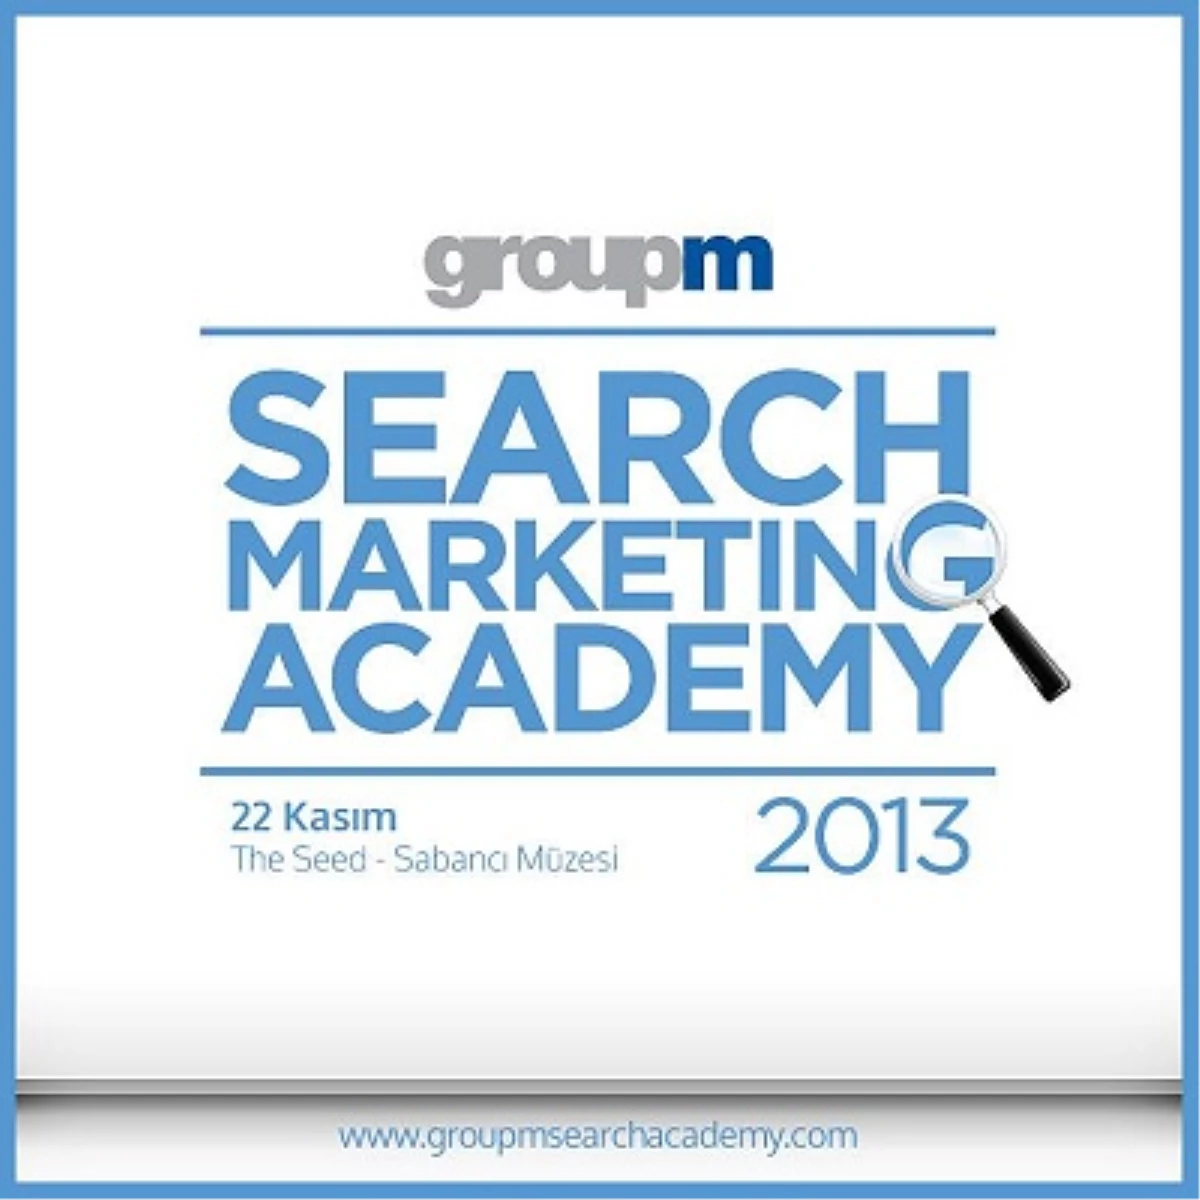 GroupM Search Academy 2013